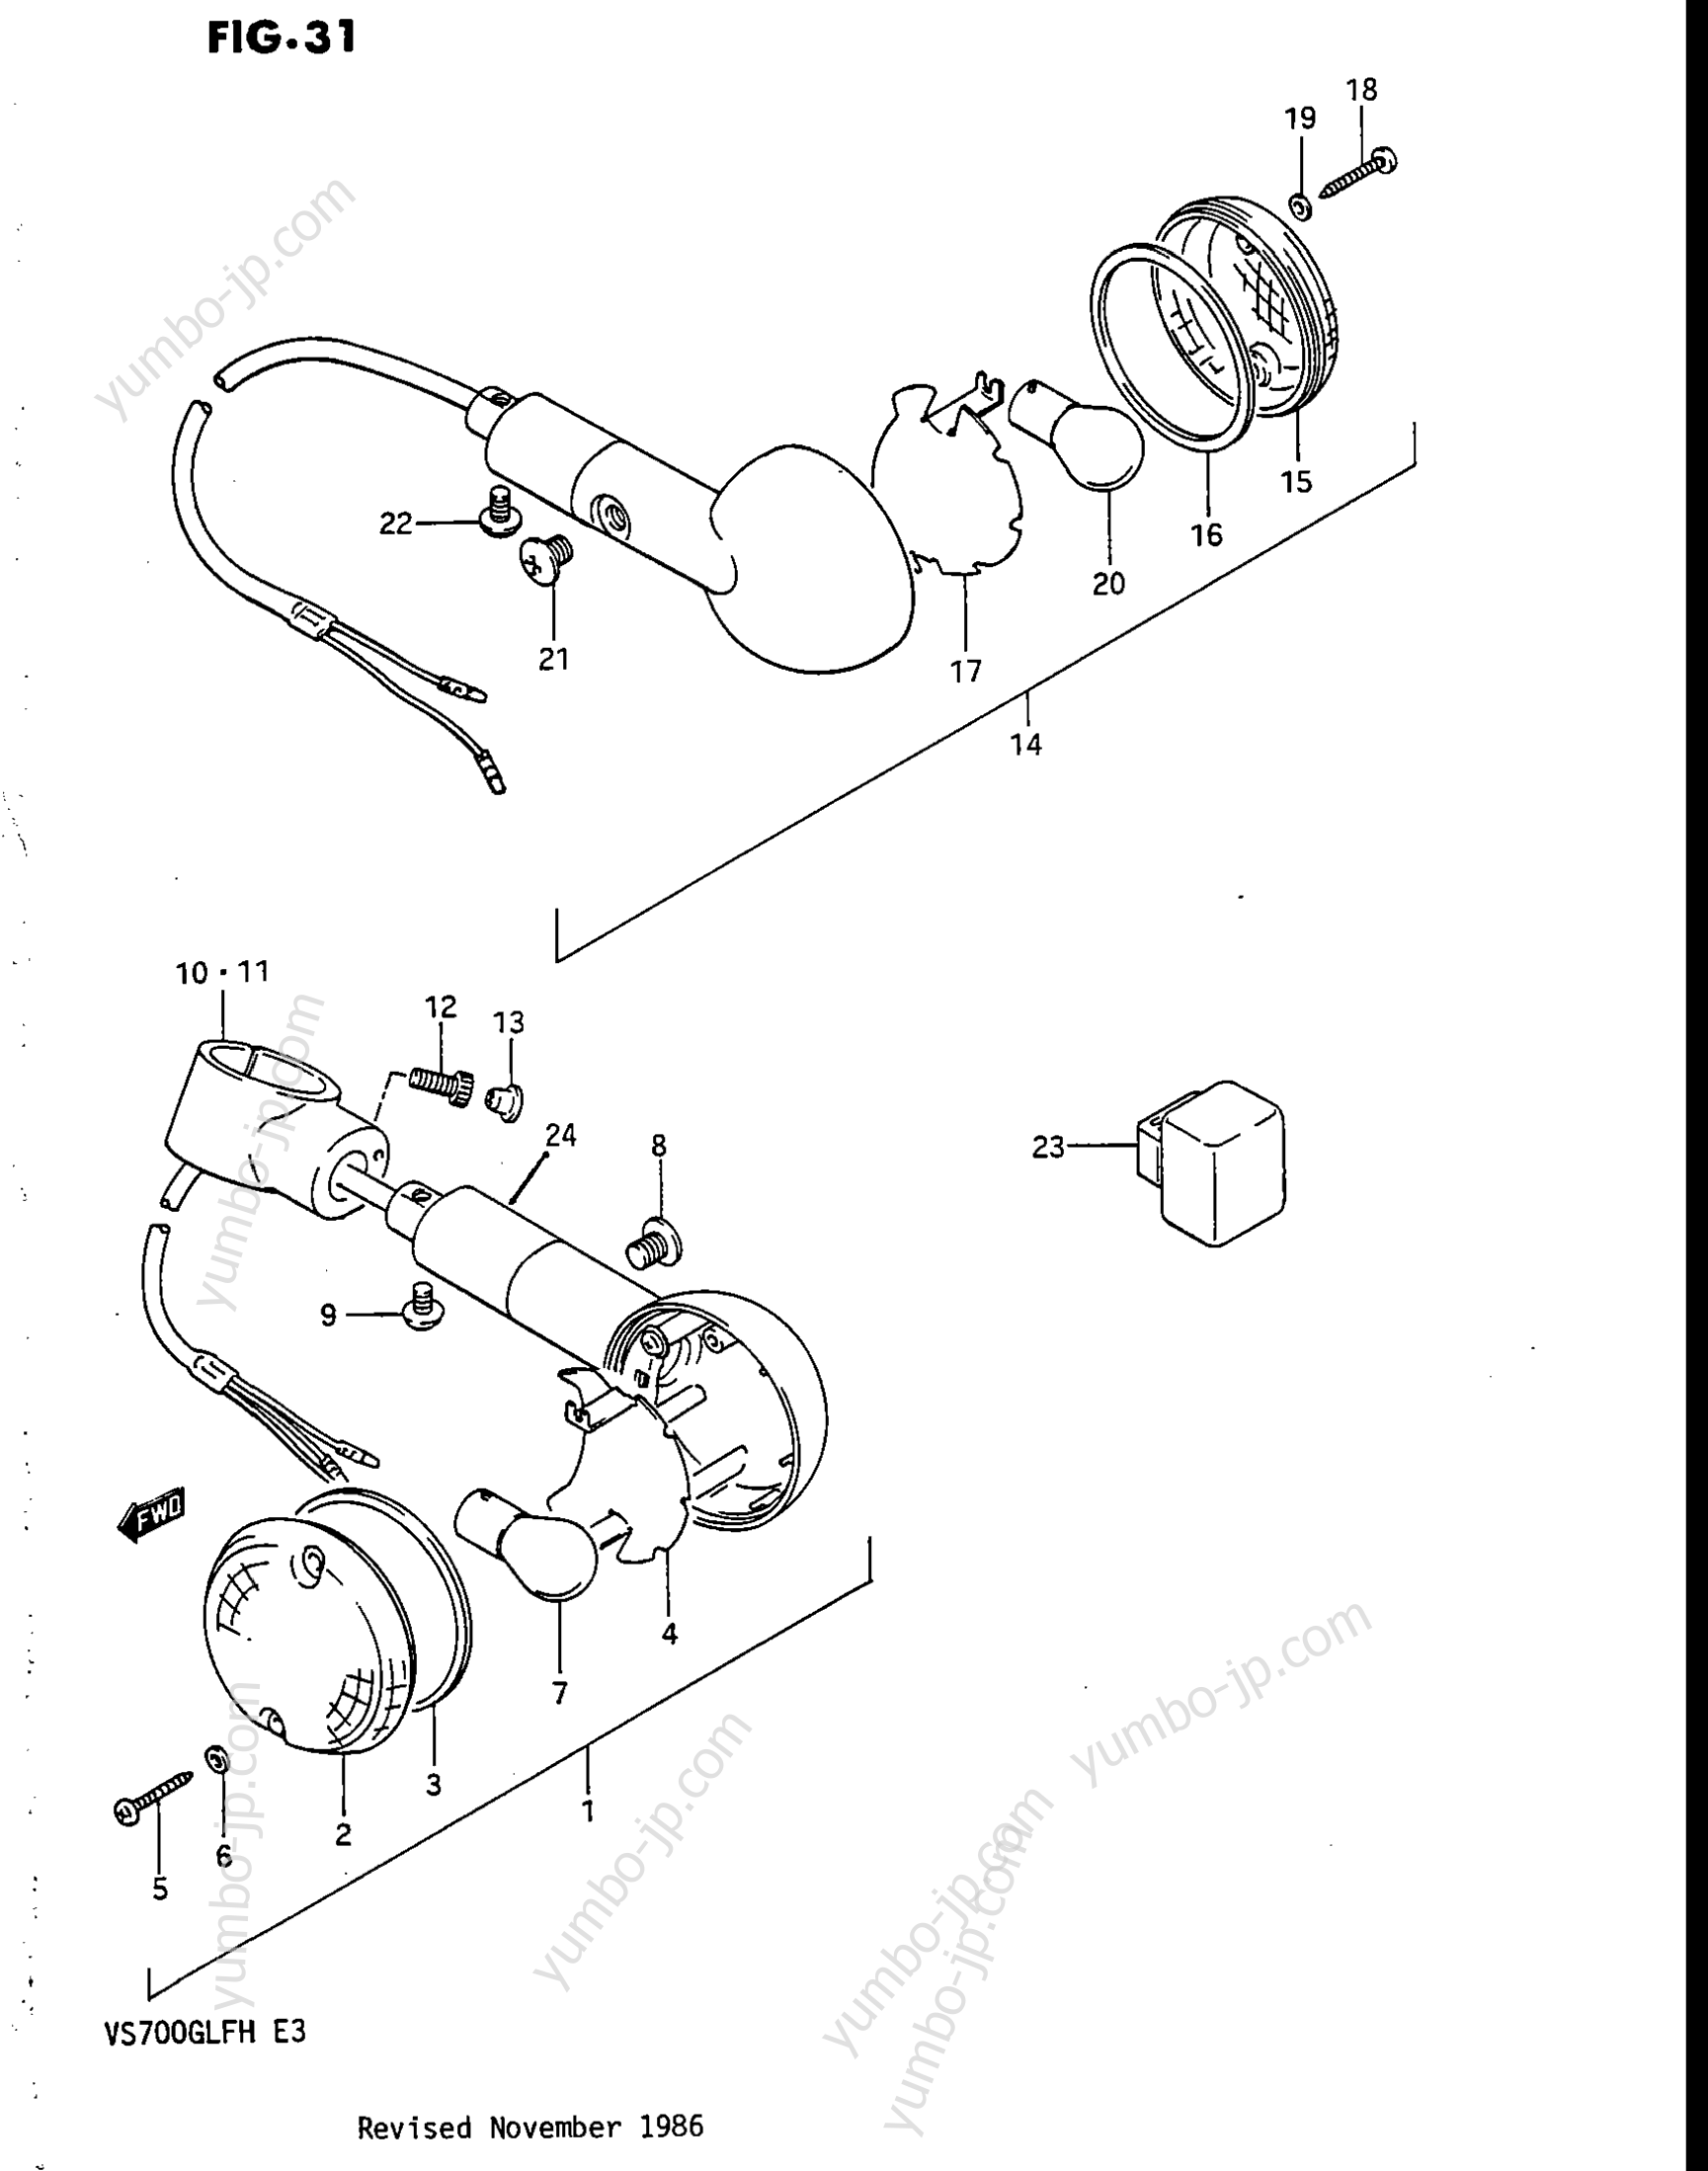 TURN SIGNAL LAMP for motorcycles SUZUKI Intruder (VS700GLF) 1986 year